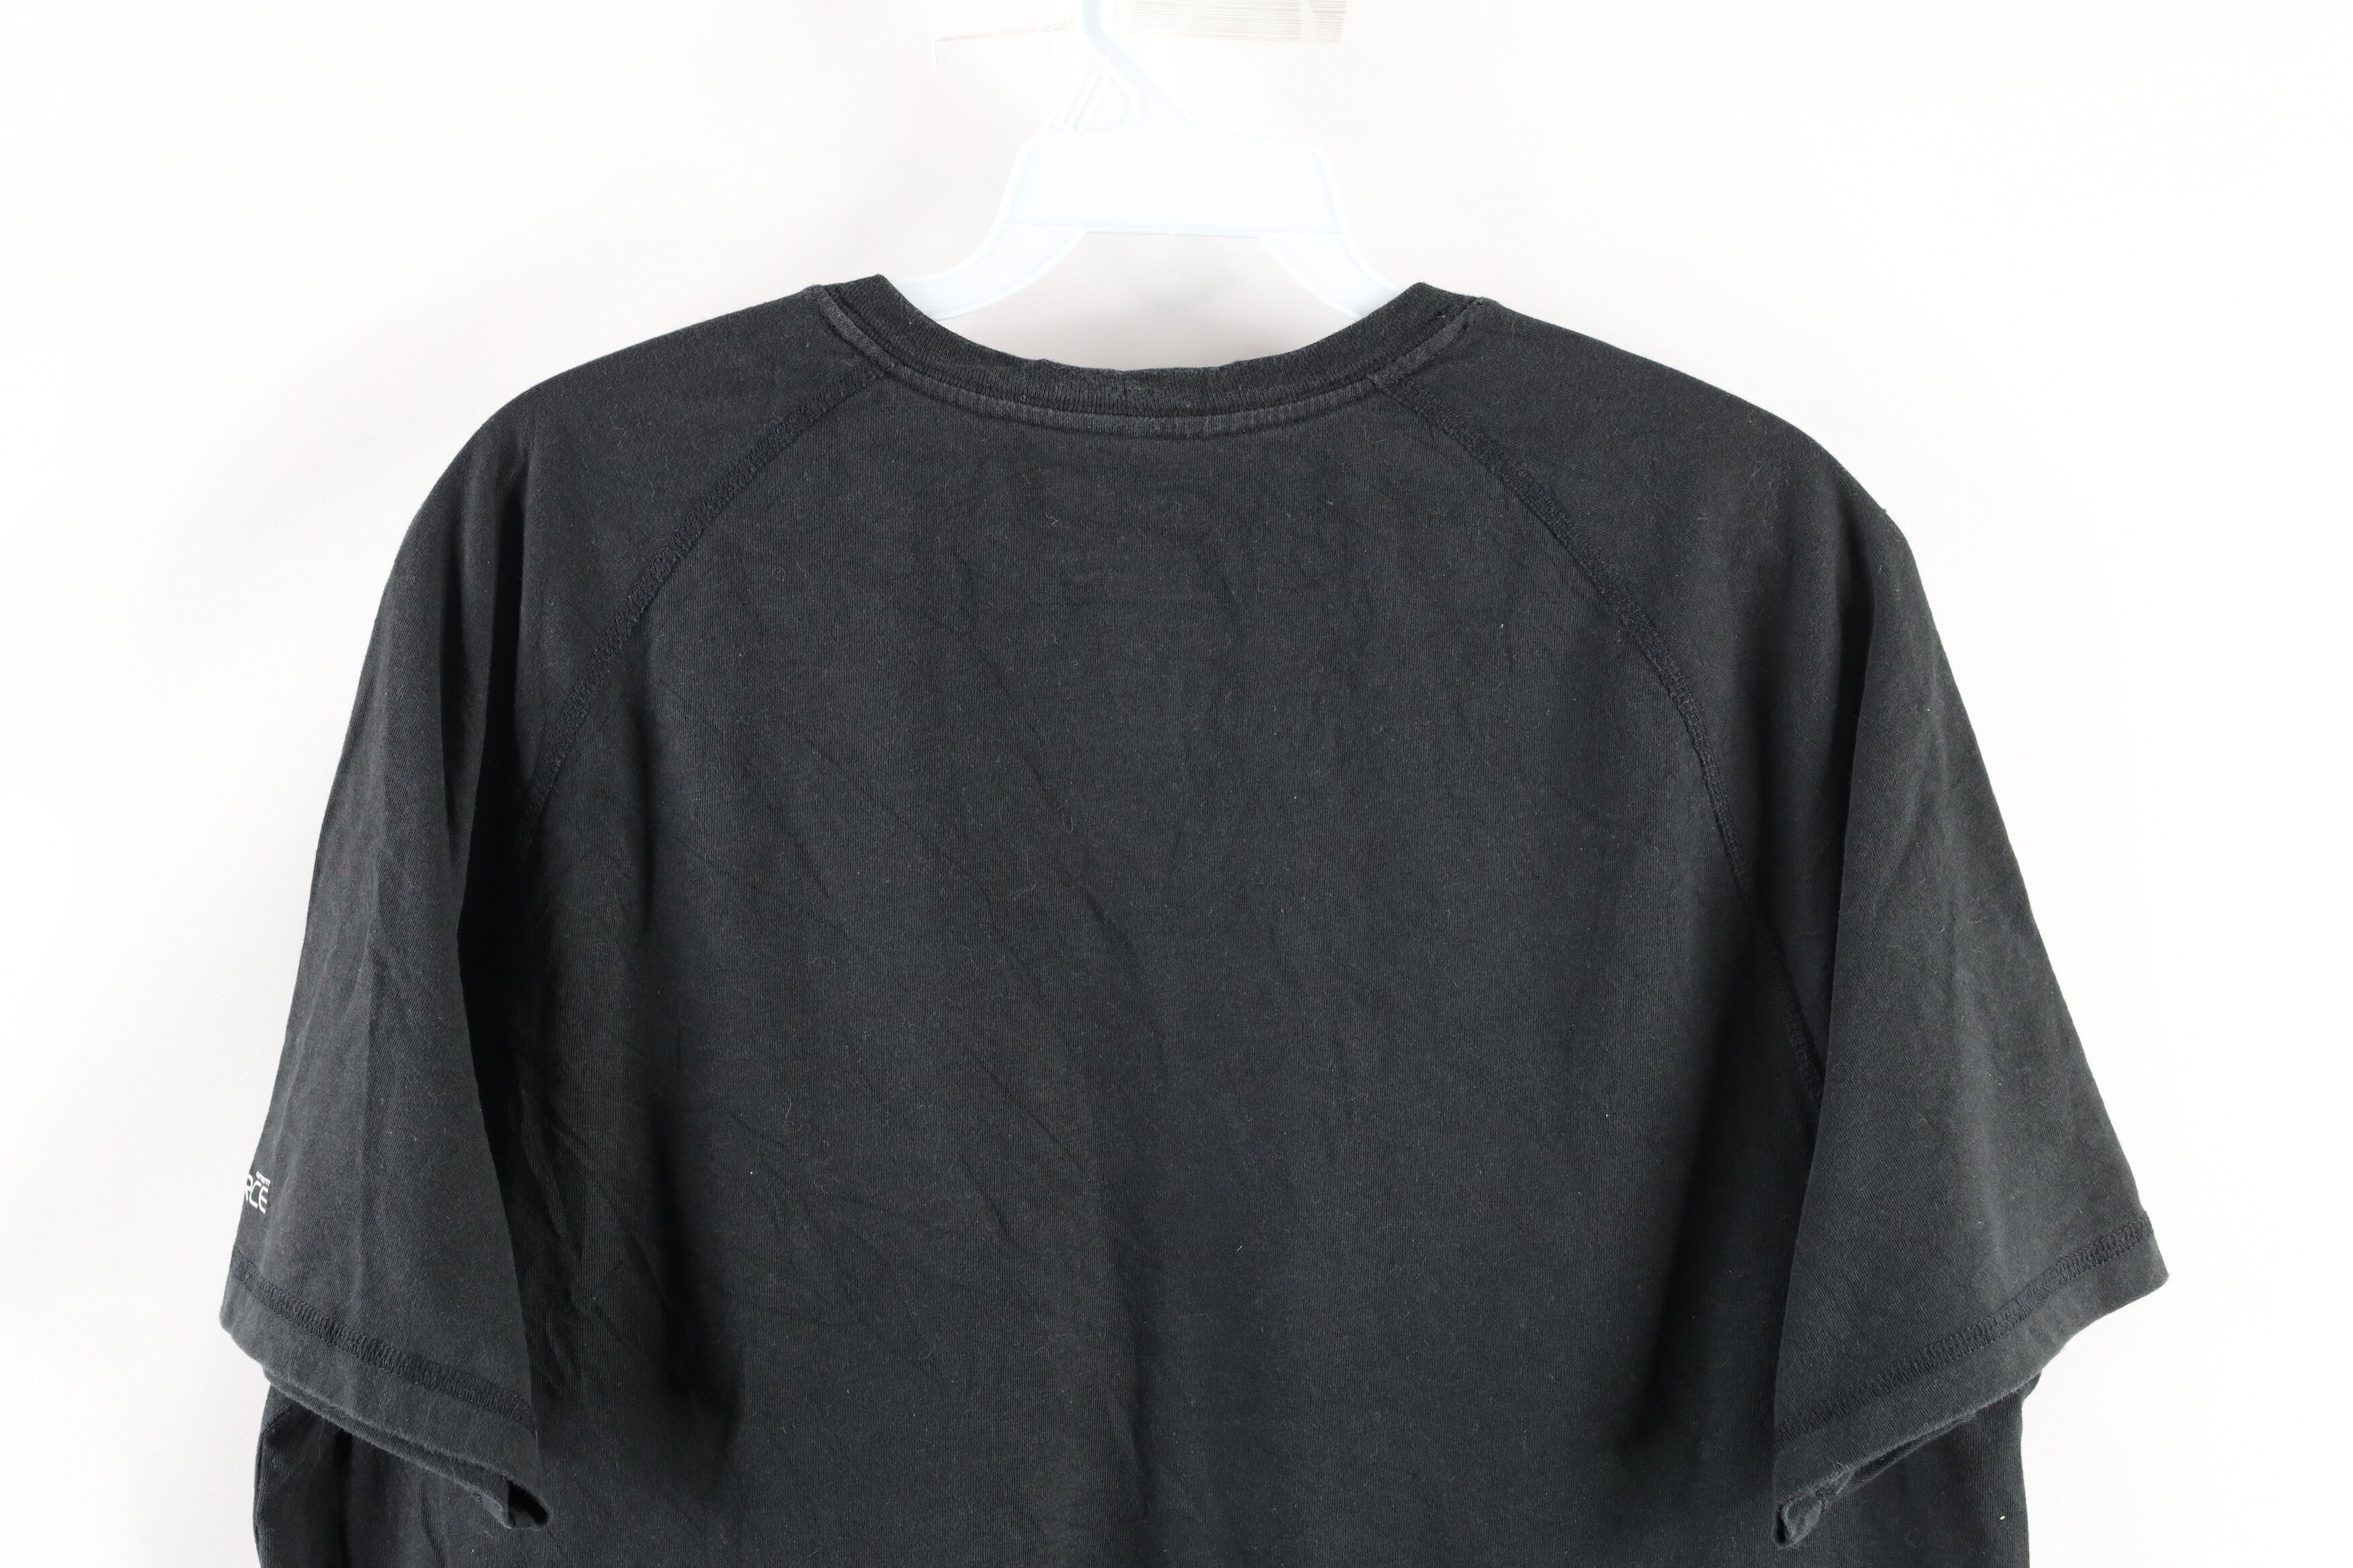 Vintage Carhartt Out Box Logo Pocket Short Sleeve T-Shirt Black Size US M / EU 48-50 / 2 - 8 Thumbnail